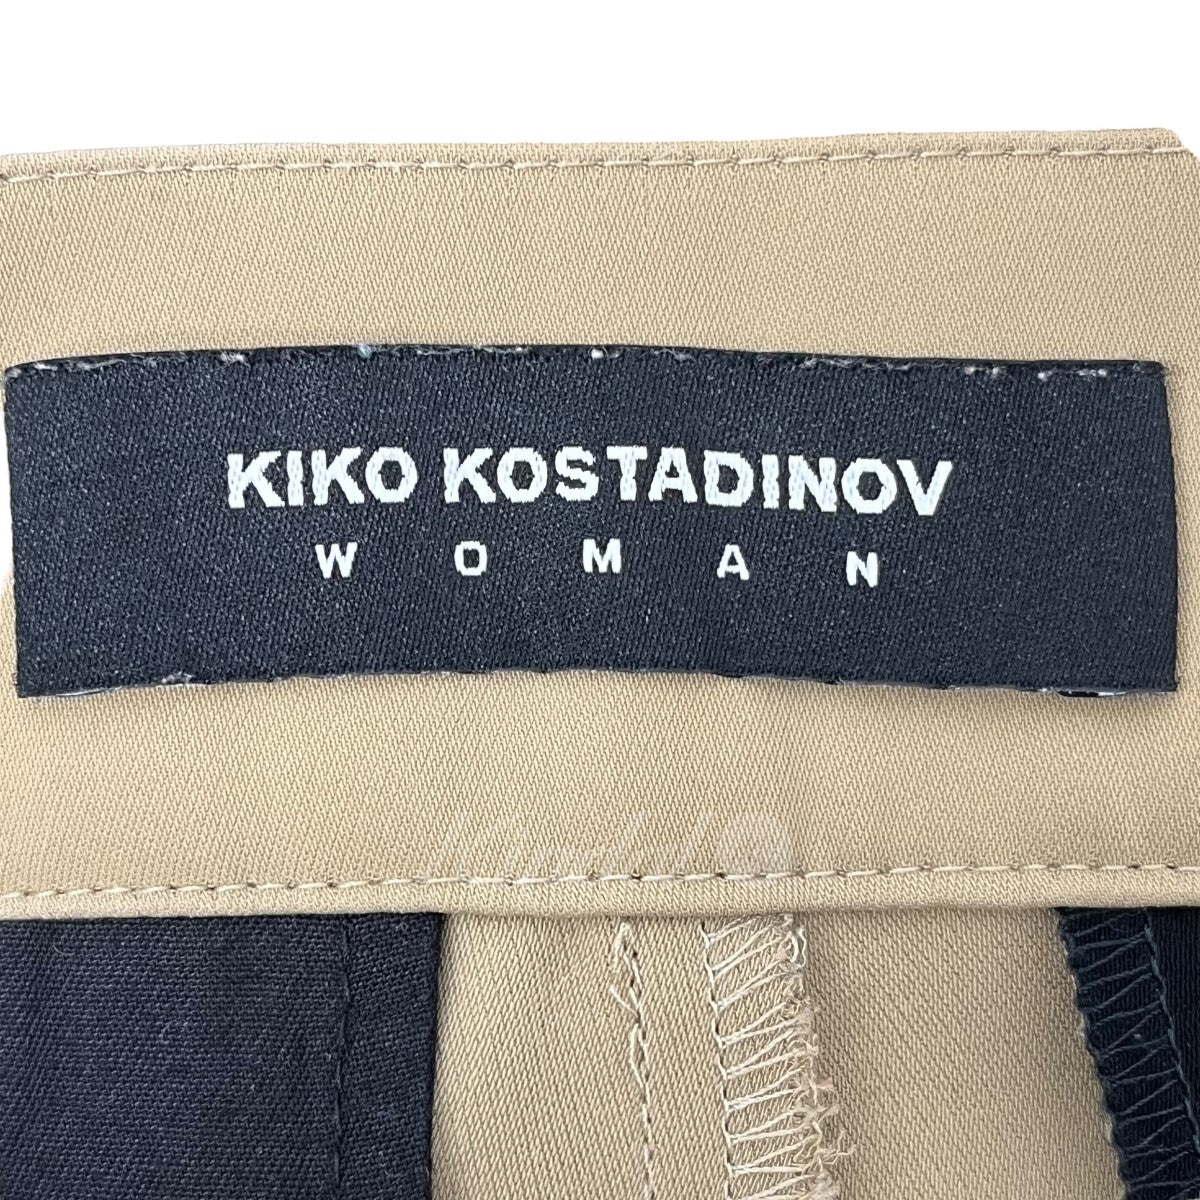 Kiko Kostadinov WOMAN(キココスタディノフウーマン) 2021SS パンツ